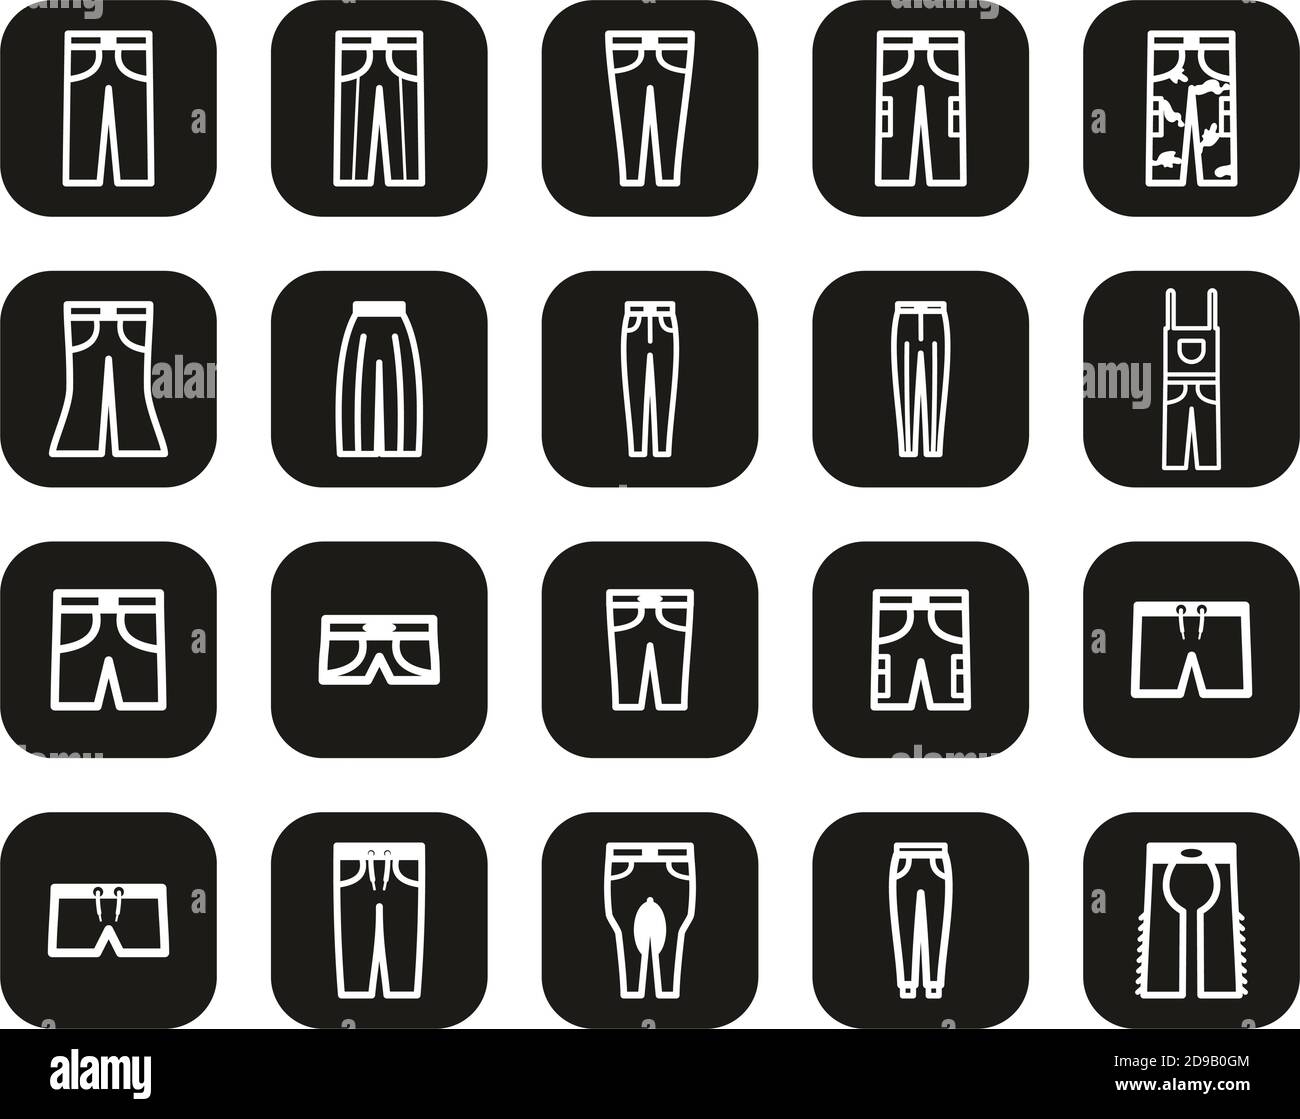 Pants Long & Short Icons White On Black Flat Design Set Big Stock Vector